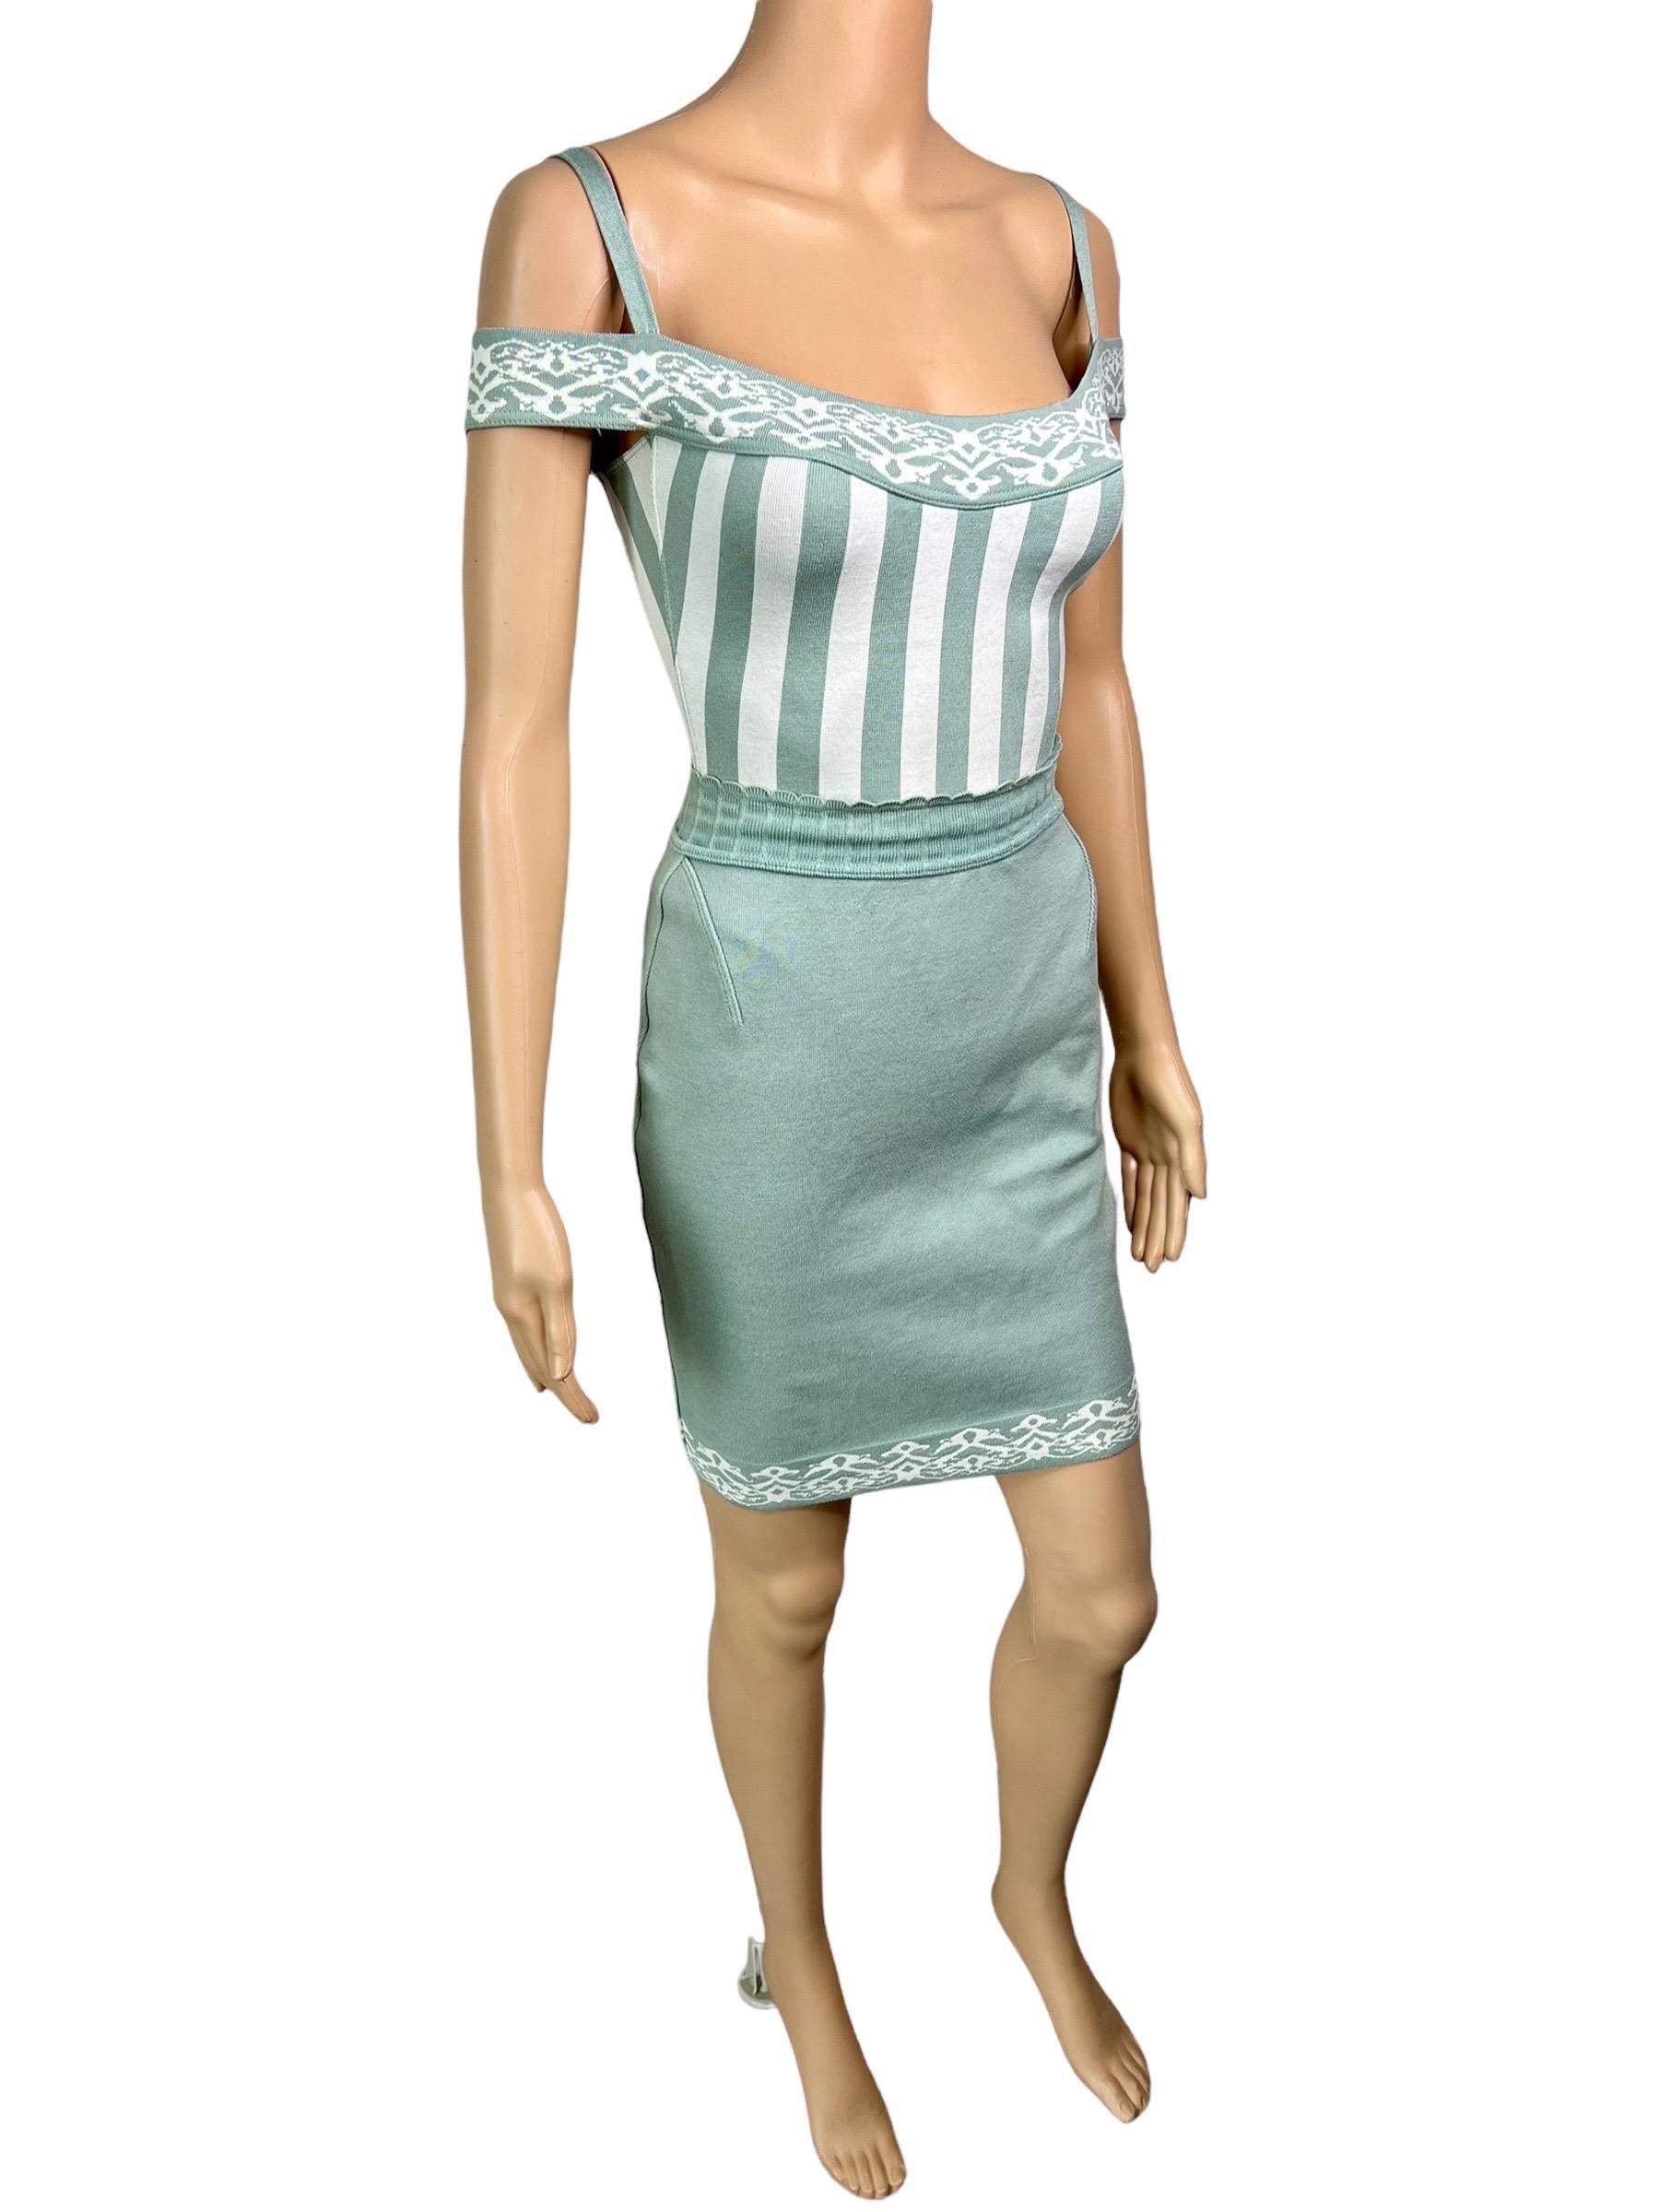 Azzedine Alaia S/S 1992 Vintage Striped Bodysuit Top and Mini Skirt 2 Piece Set For Sale 1